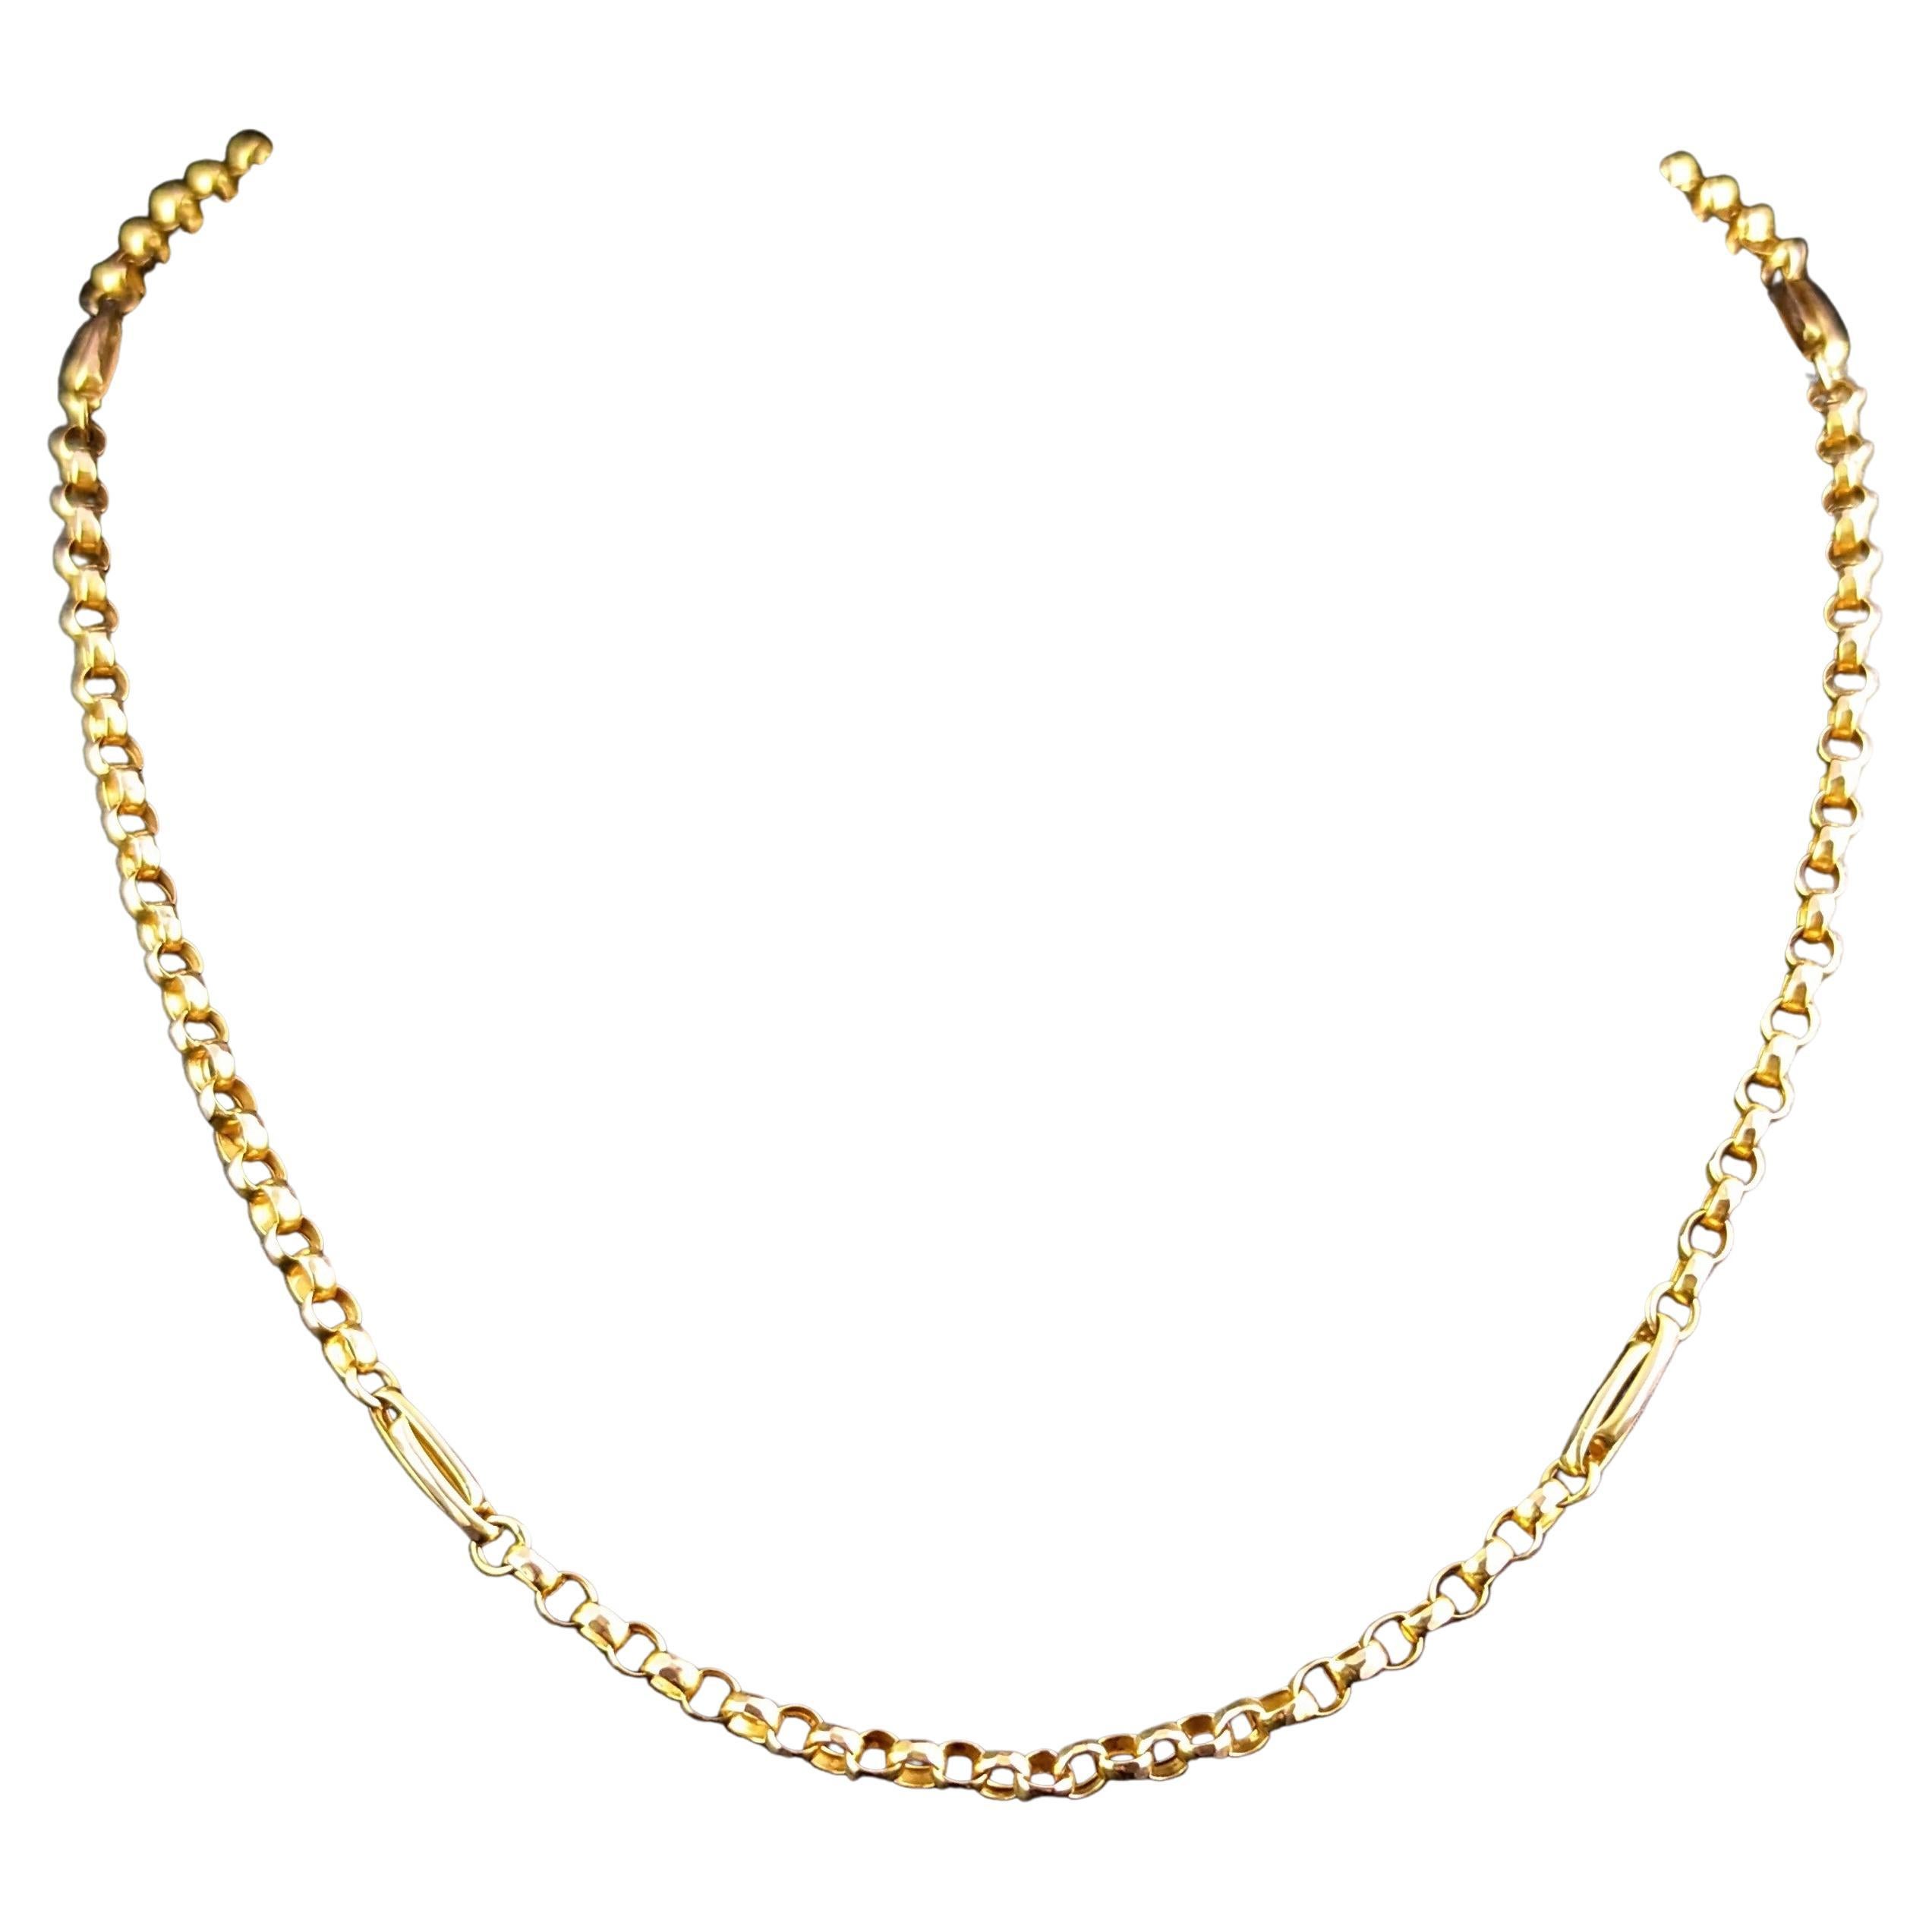 Antique 9k Gold Chain Necklace, Fancy Link, Edwardian